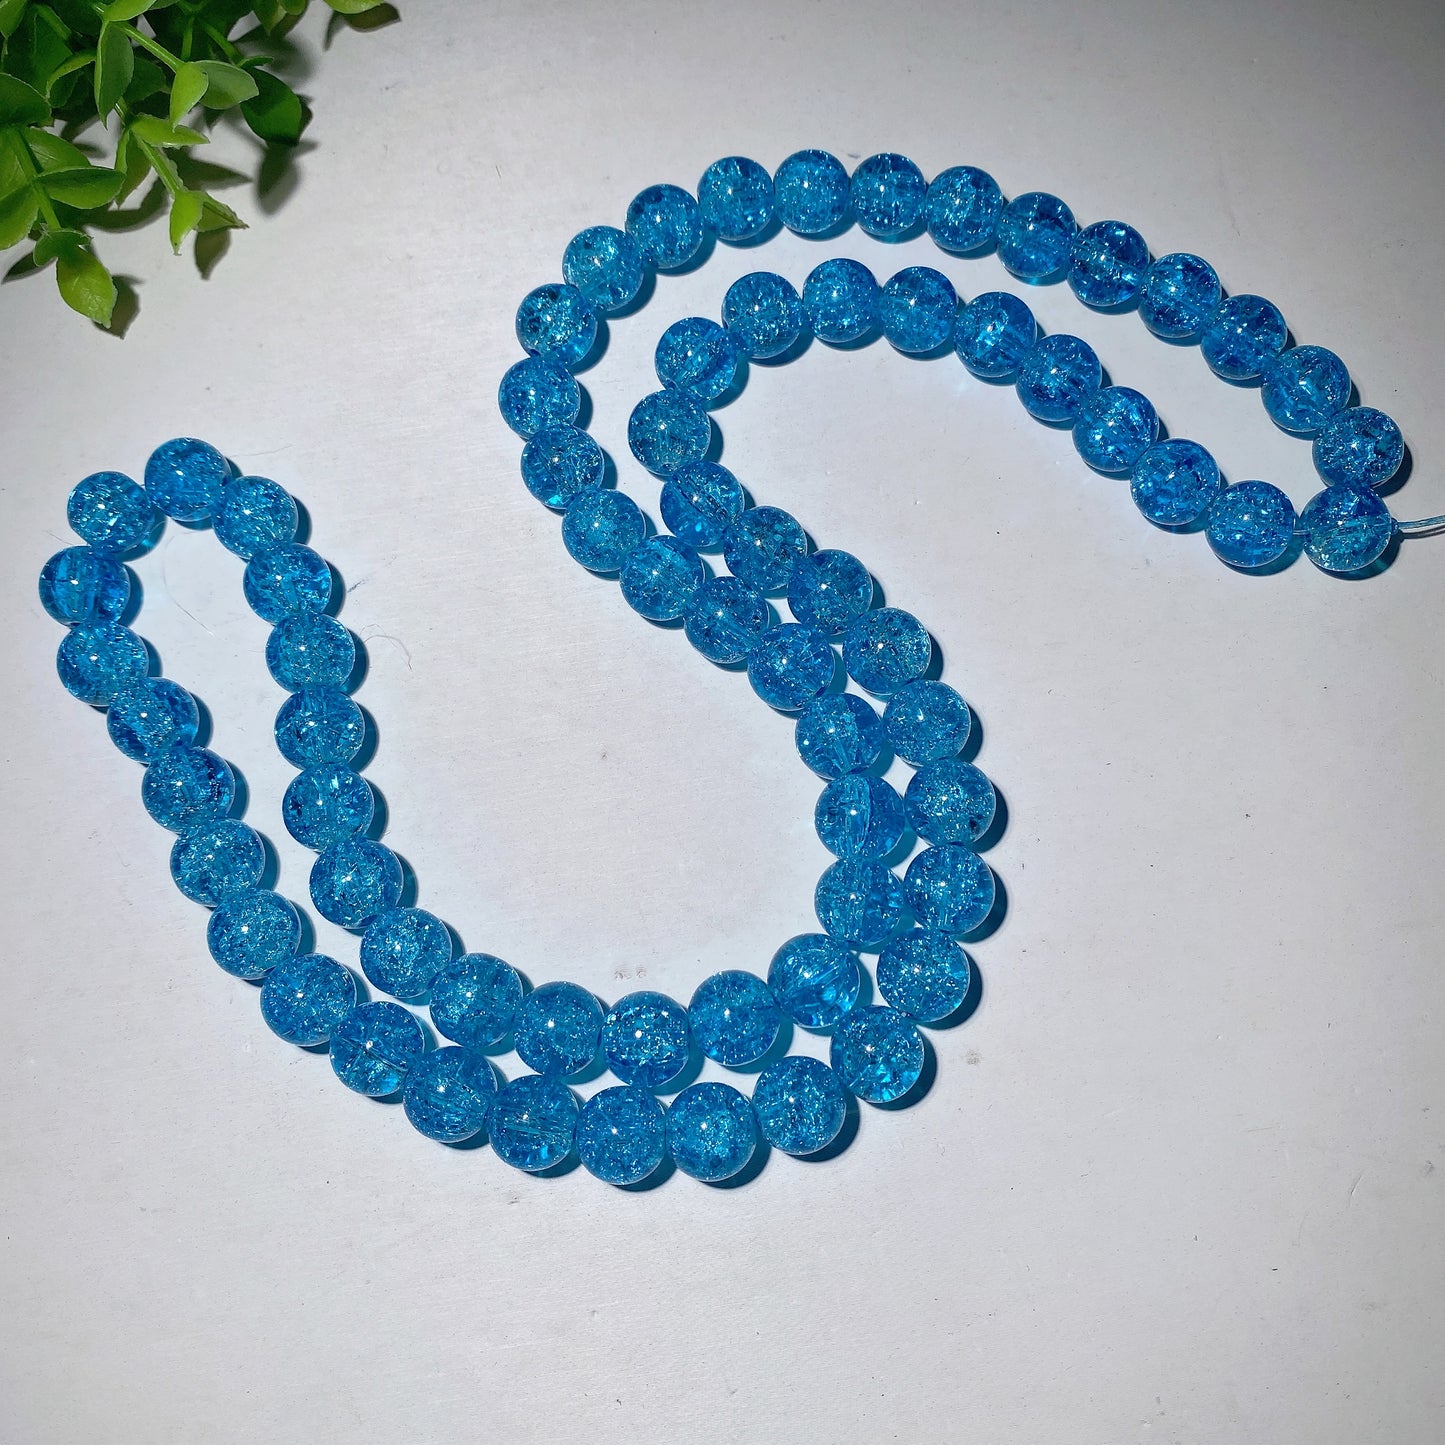 12mm Colorful Crack Crystal Beads Strand Bulk Wholesale